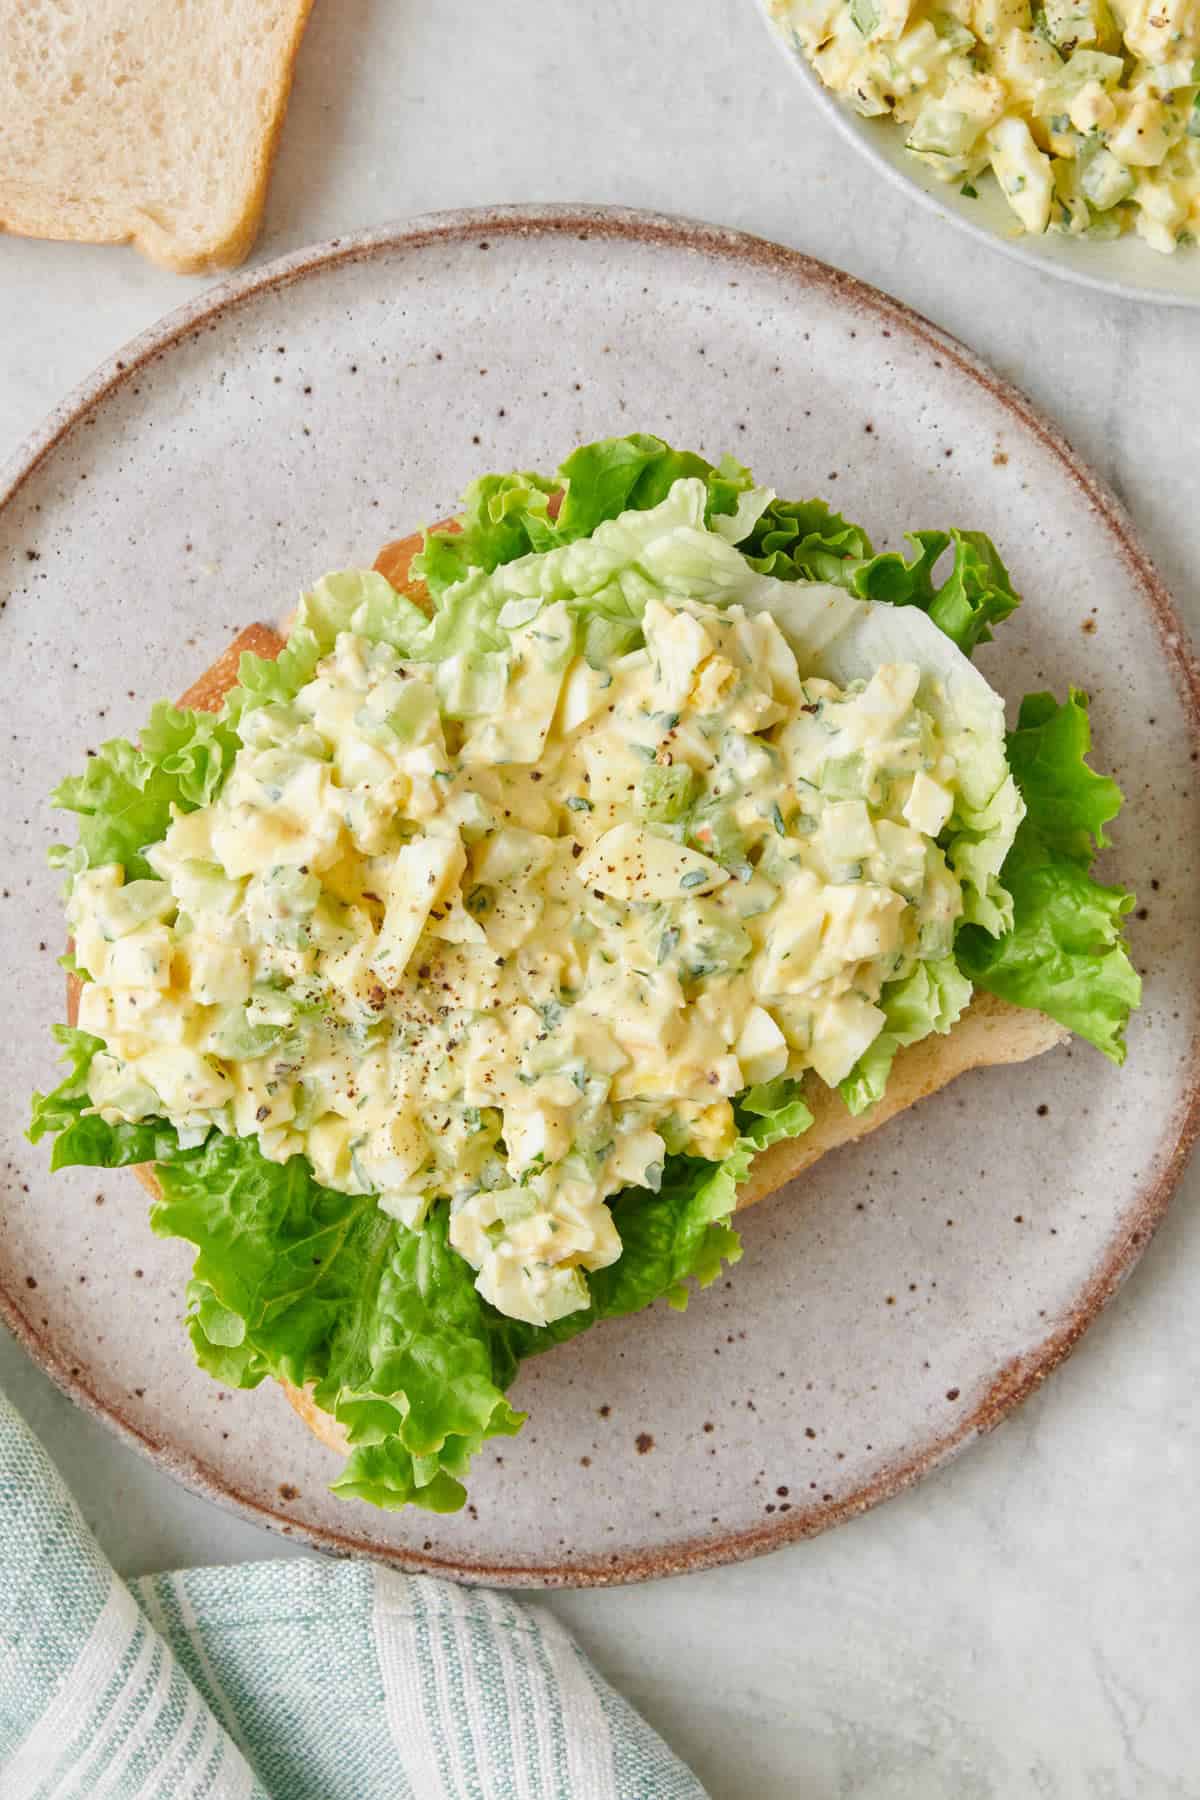 Egg Salad Sandwich たまごサンド弁当 • Just One Cookbook